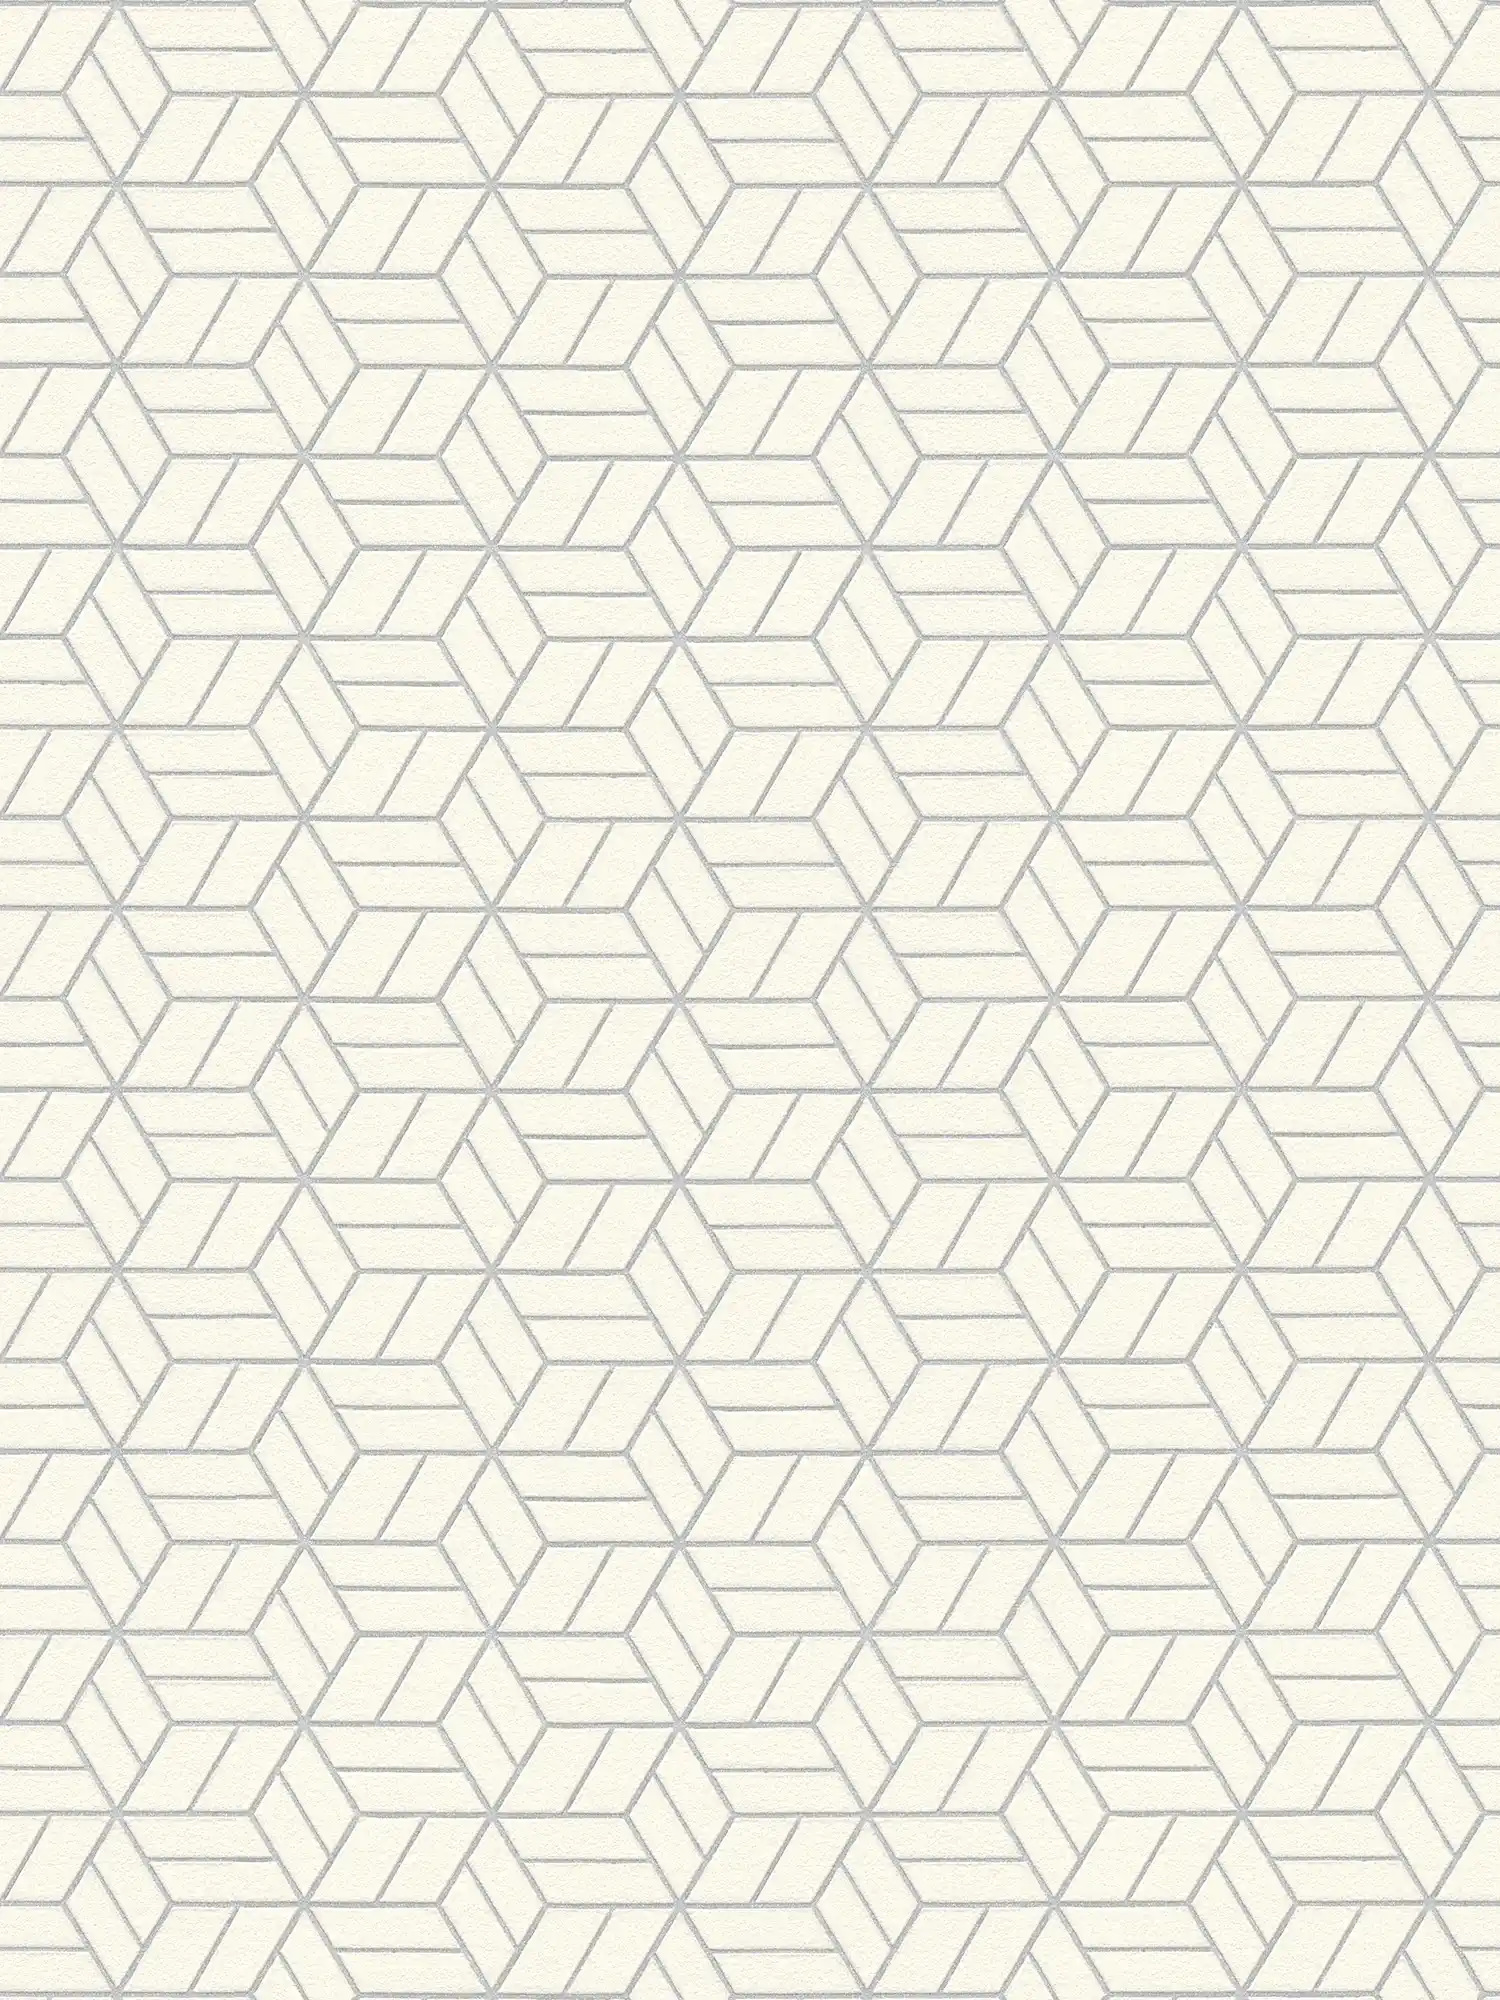 behang geometrisch patroon & glittereffect - zilver, grijs, wit
